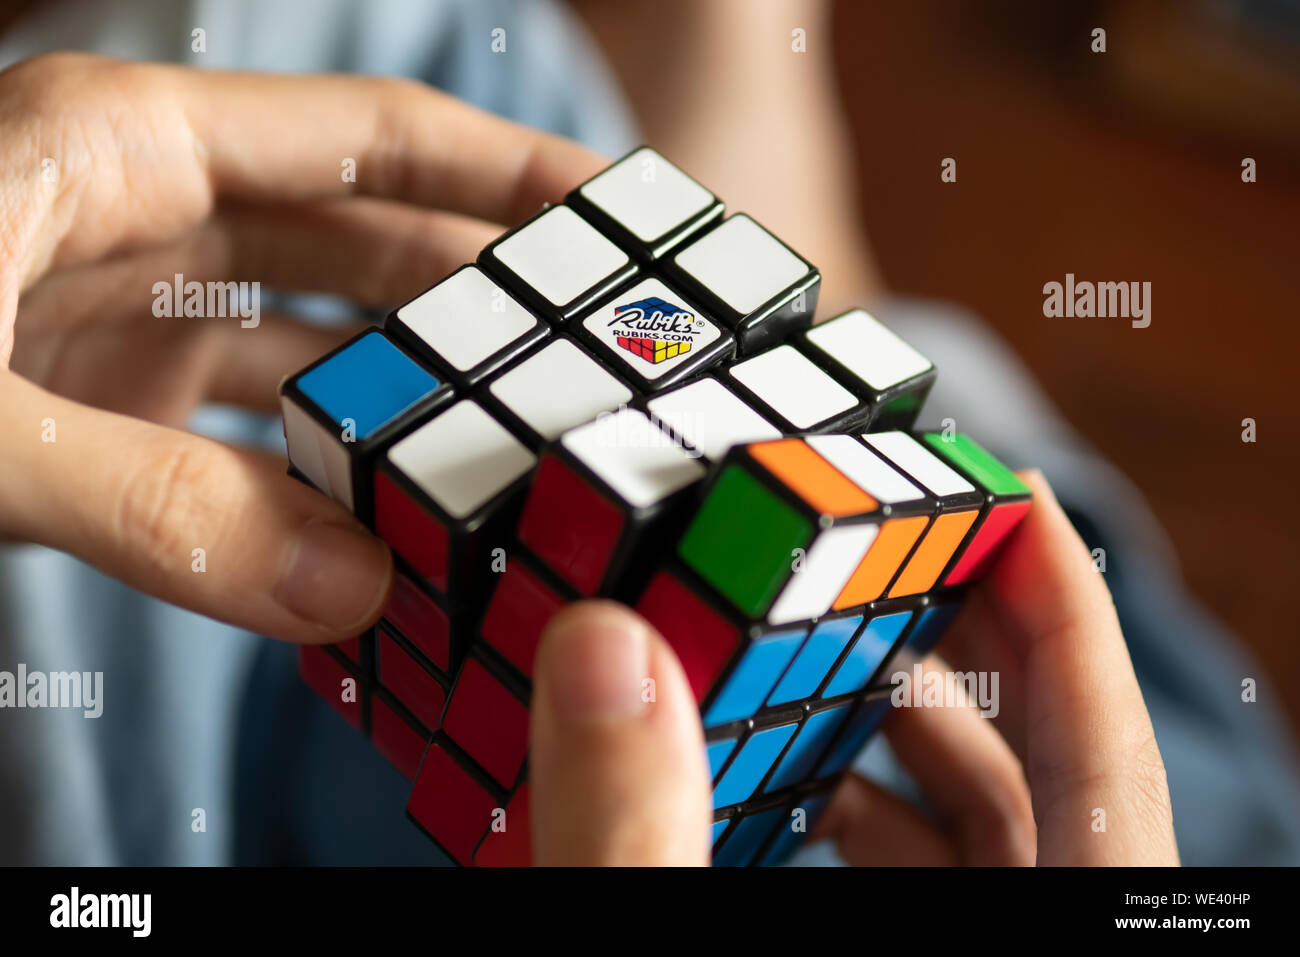 Bangkok Thailand August 22 2019 A Man Solving Rubik S Cube 4x4 Stock Photo Alamy - 4x4 robux cube